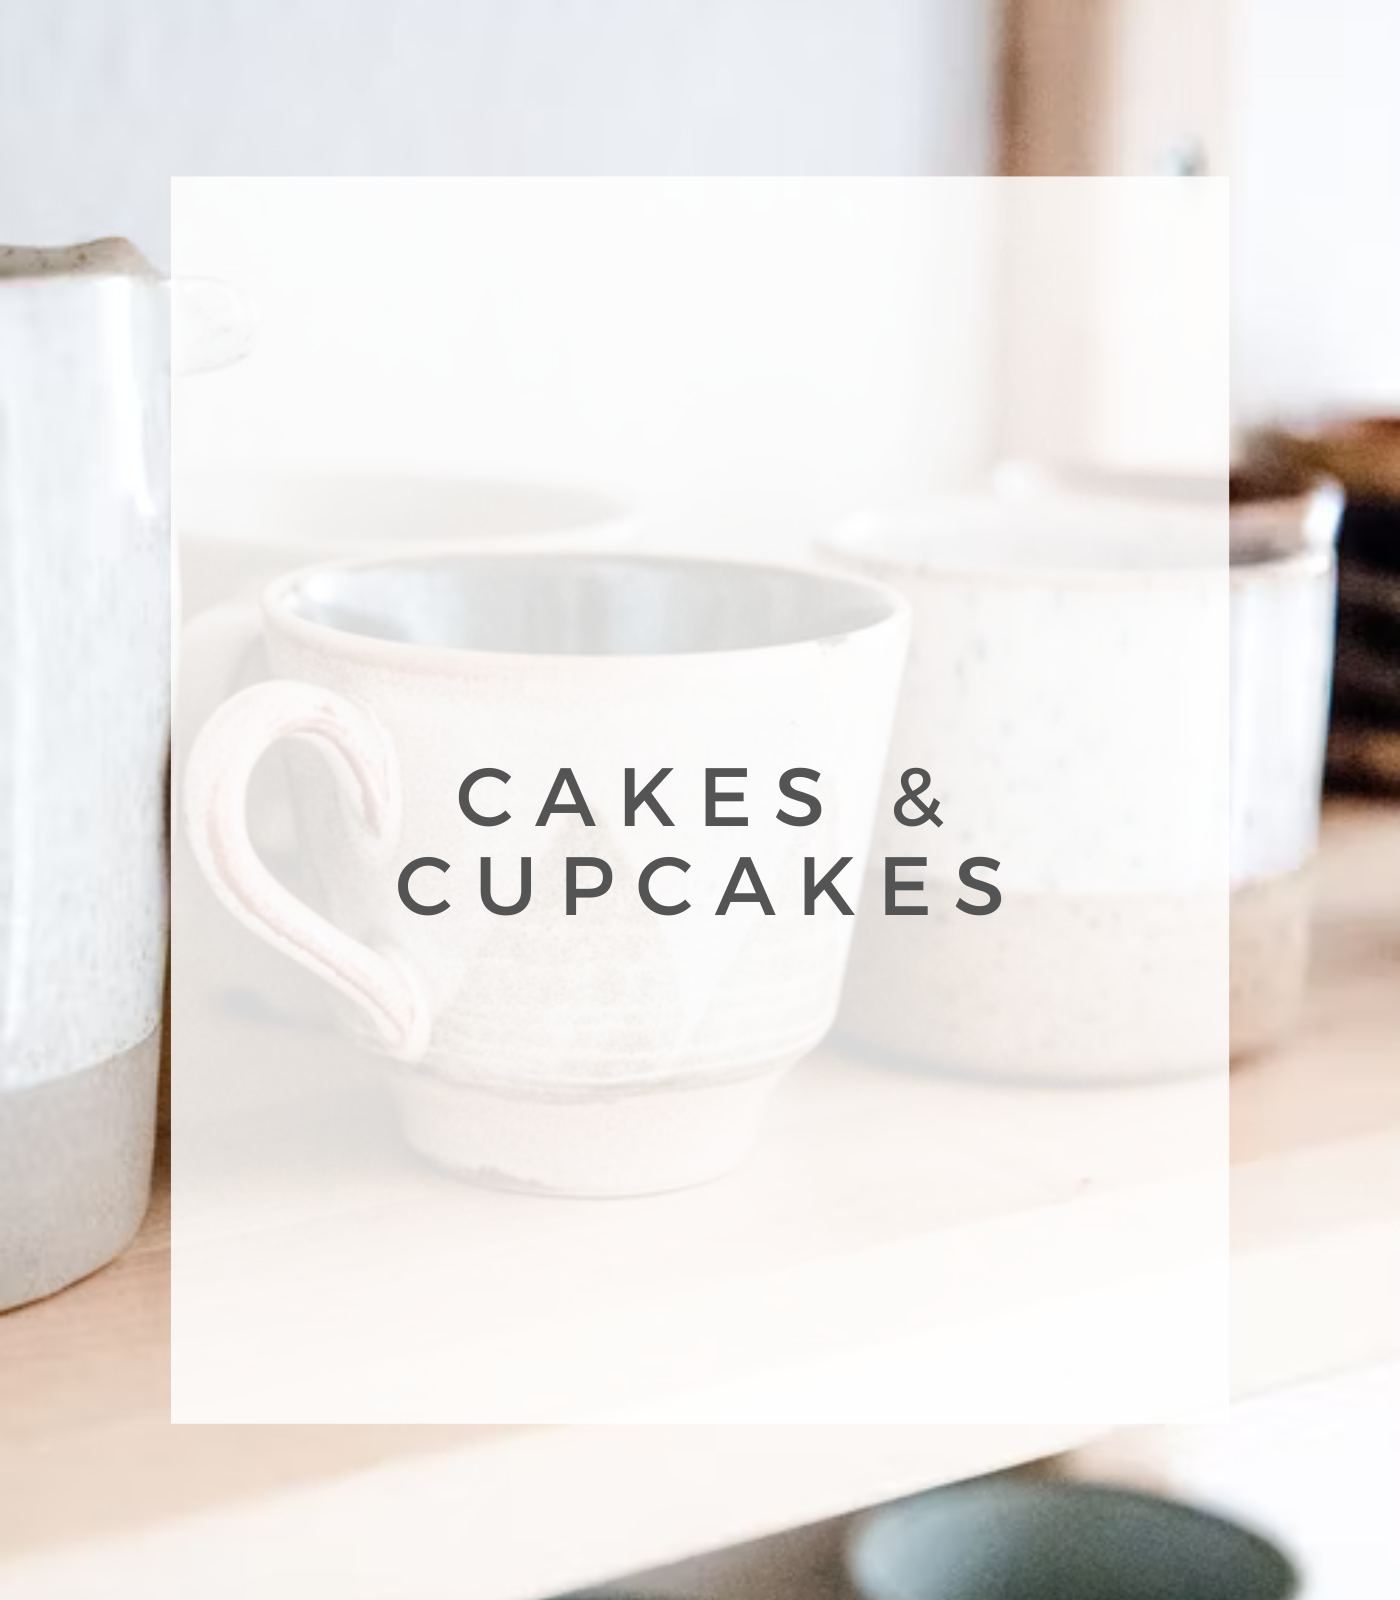 Cakes & Cupcakes